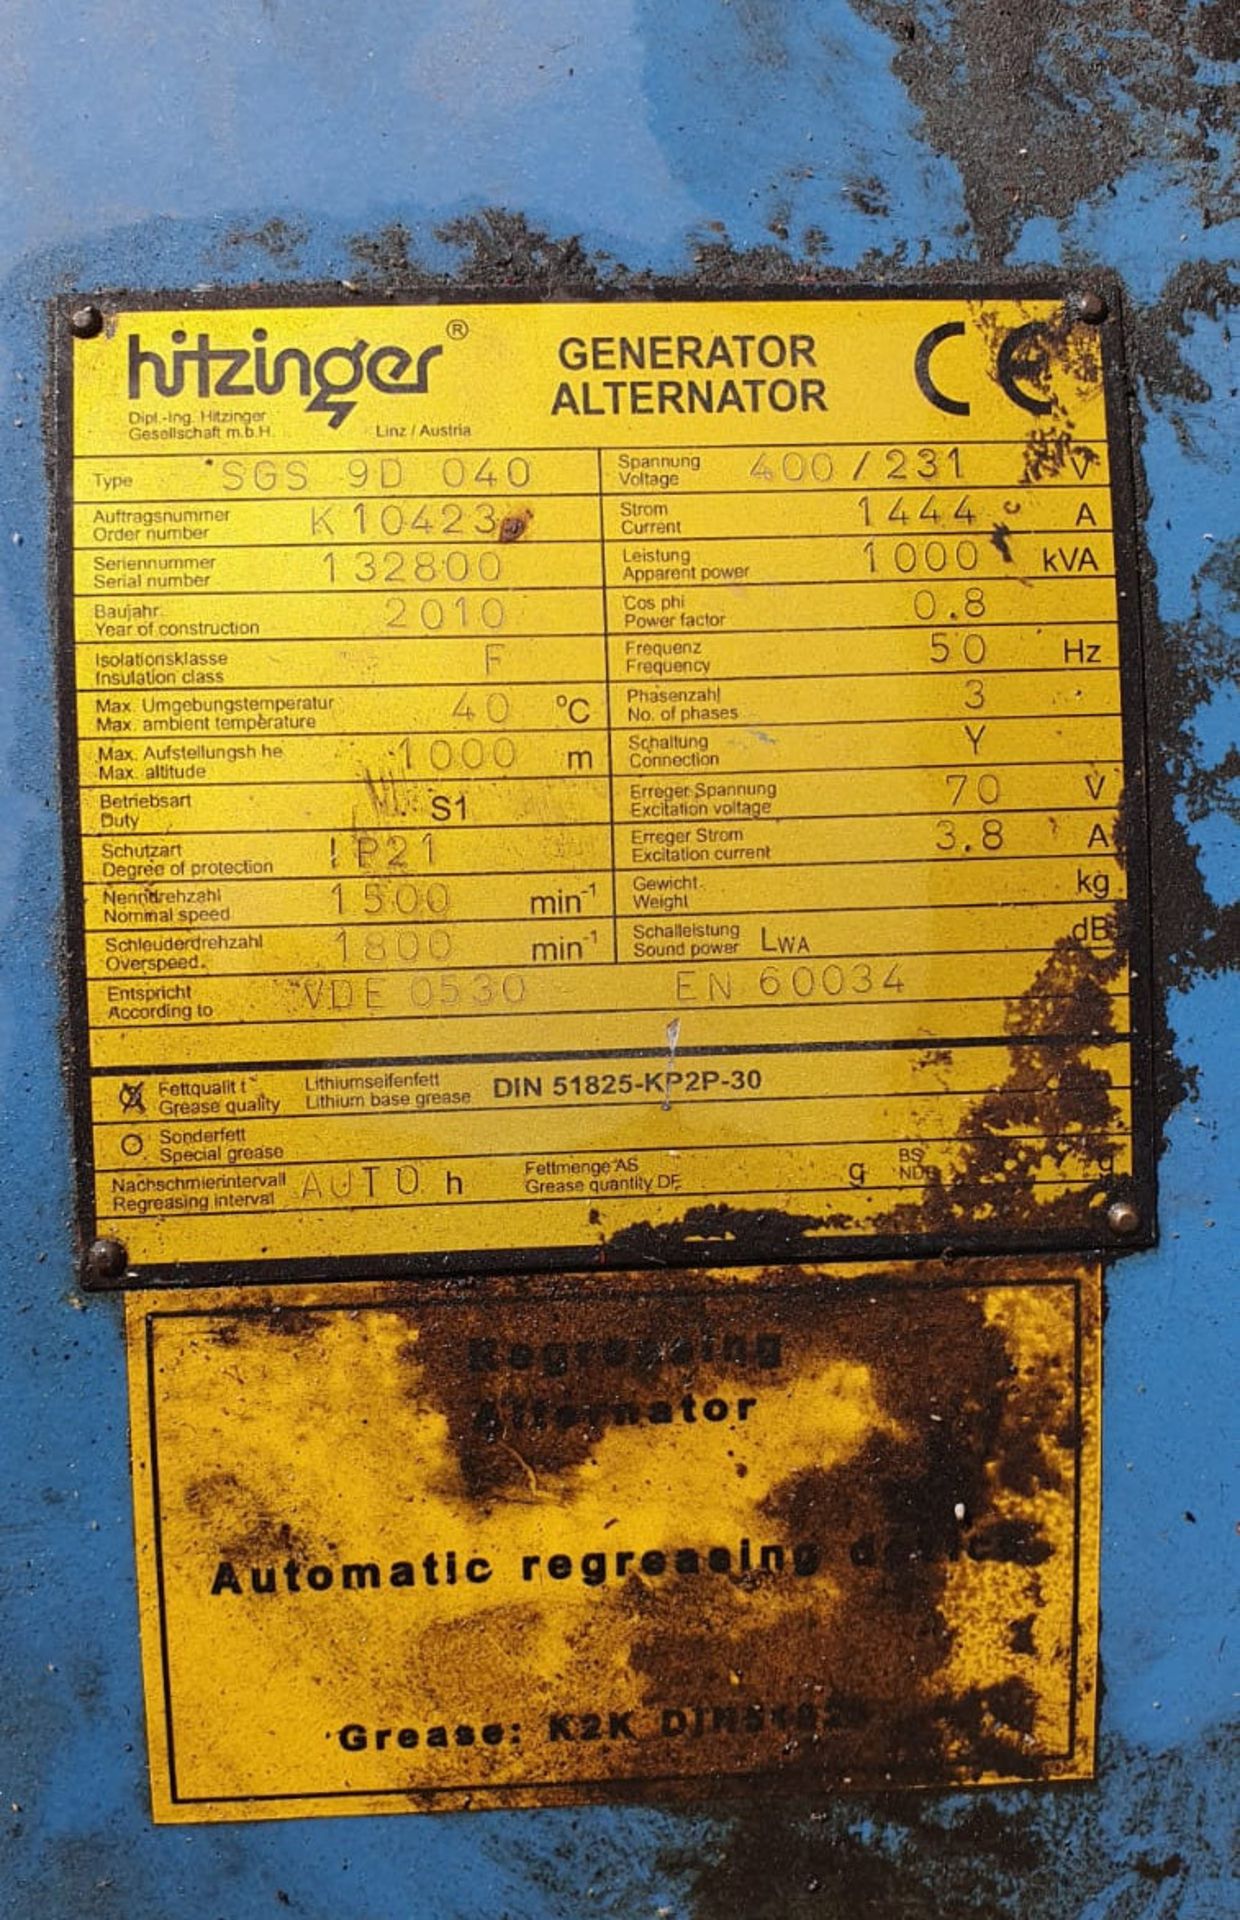 1 x 1987 Hitzinger SGS 9D 040 Generator - Only 800 Hours Use - Ref: T4UB/HZ - CL333 - Location: - Bild 8 aus 20